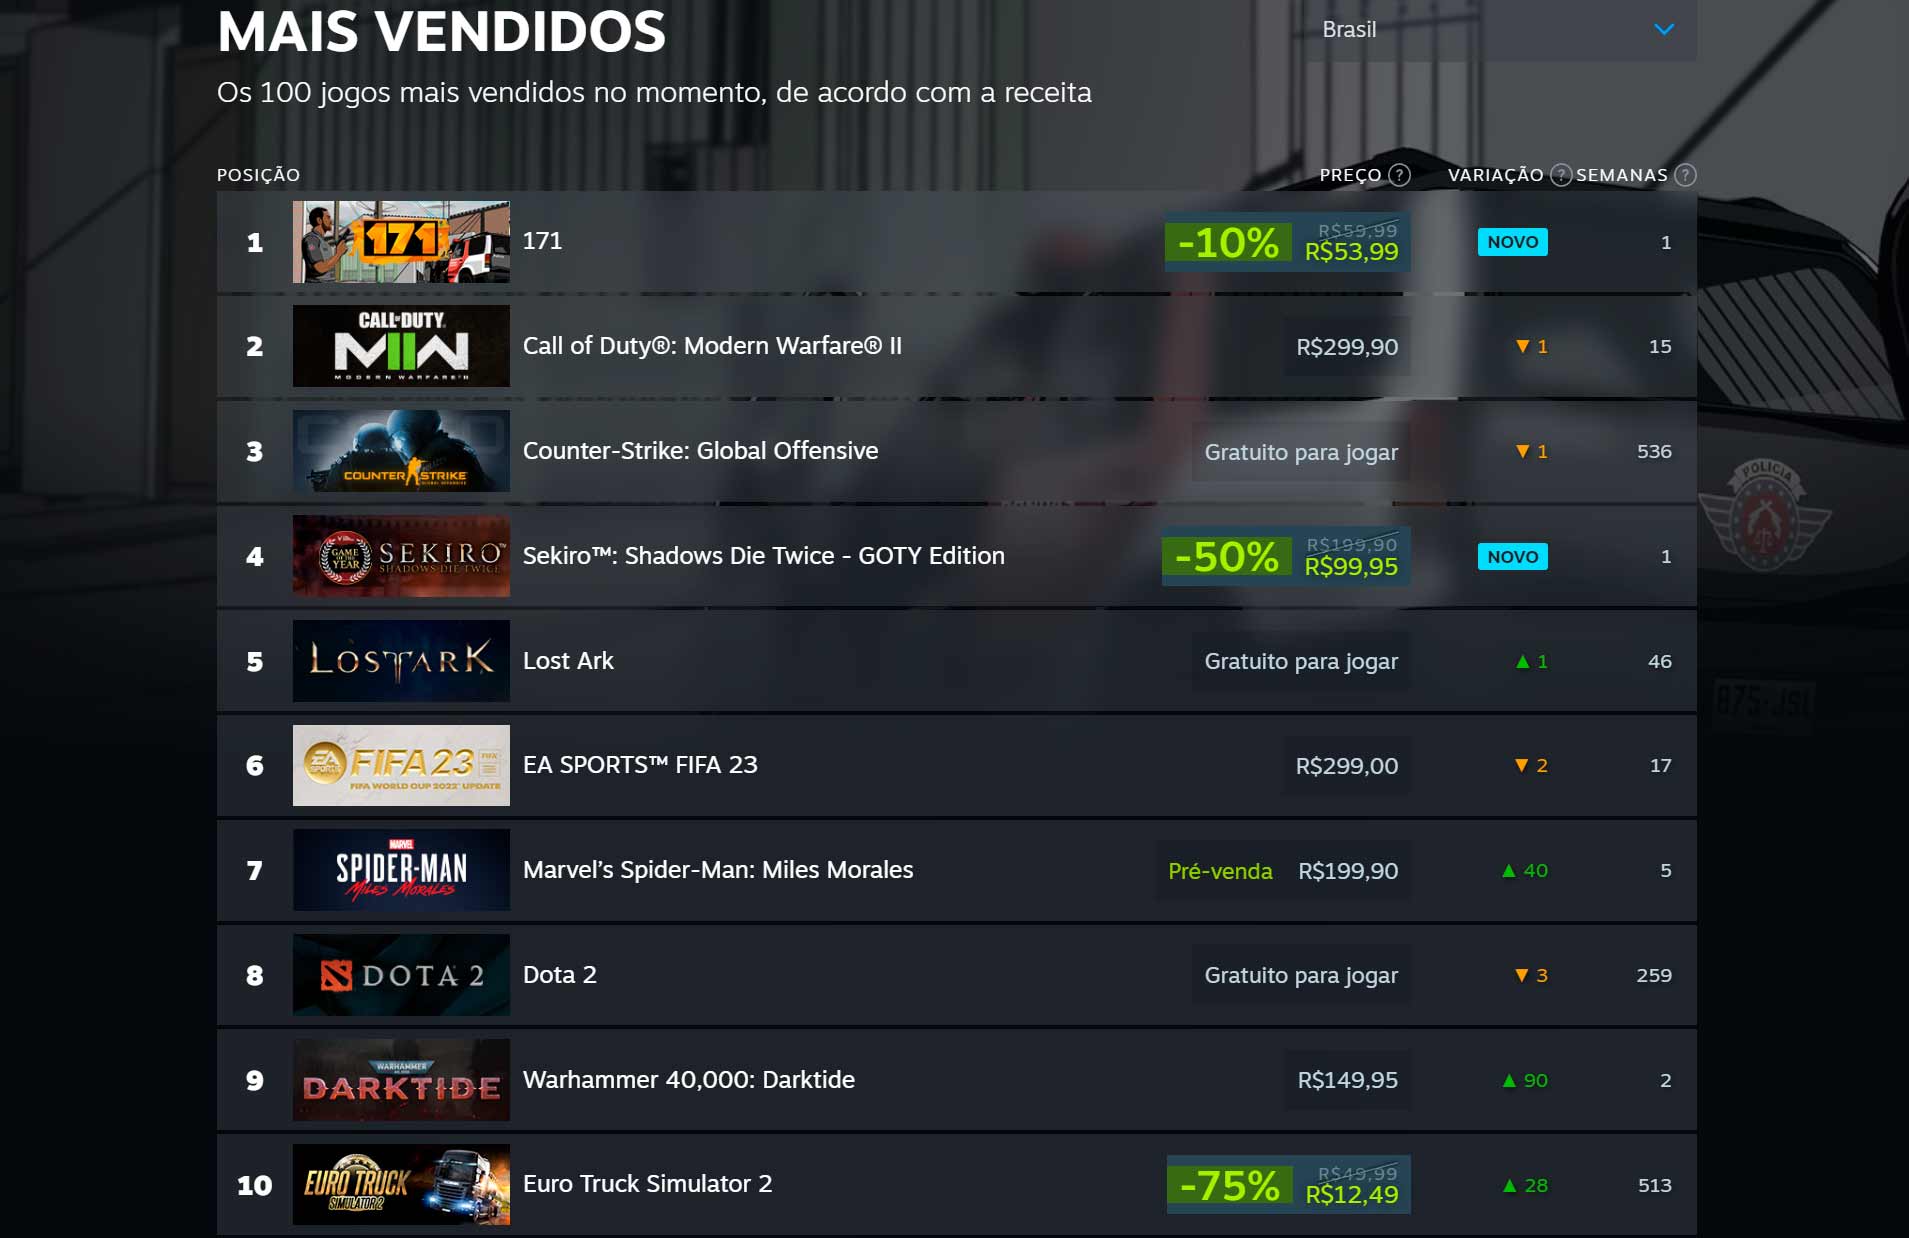 171, GTA Br alcança 1° lugar de vendas na Steam Brasil